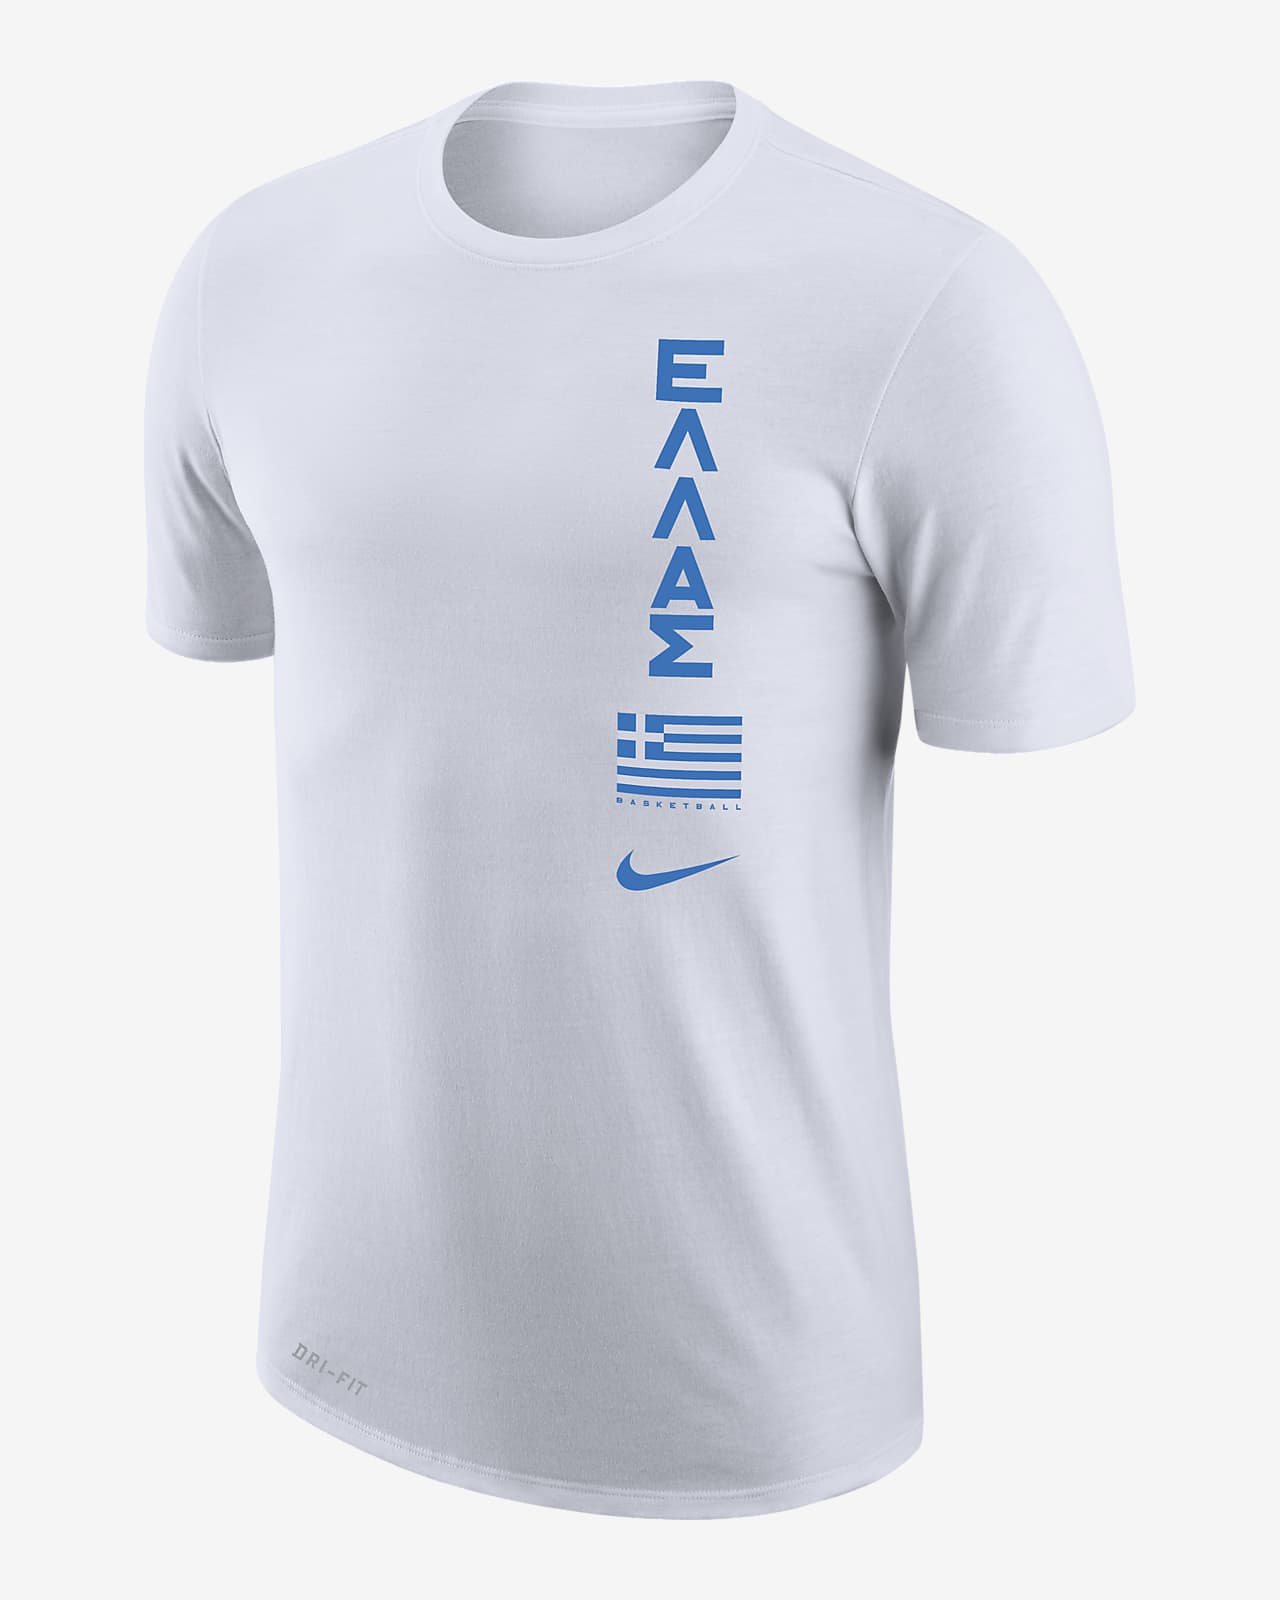 Greece Men's Nike Dri-FIT Basketball T-Shirt